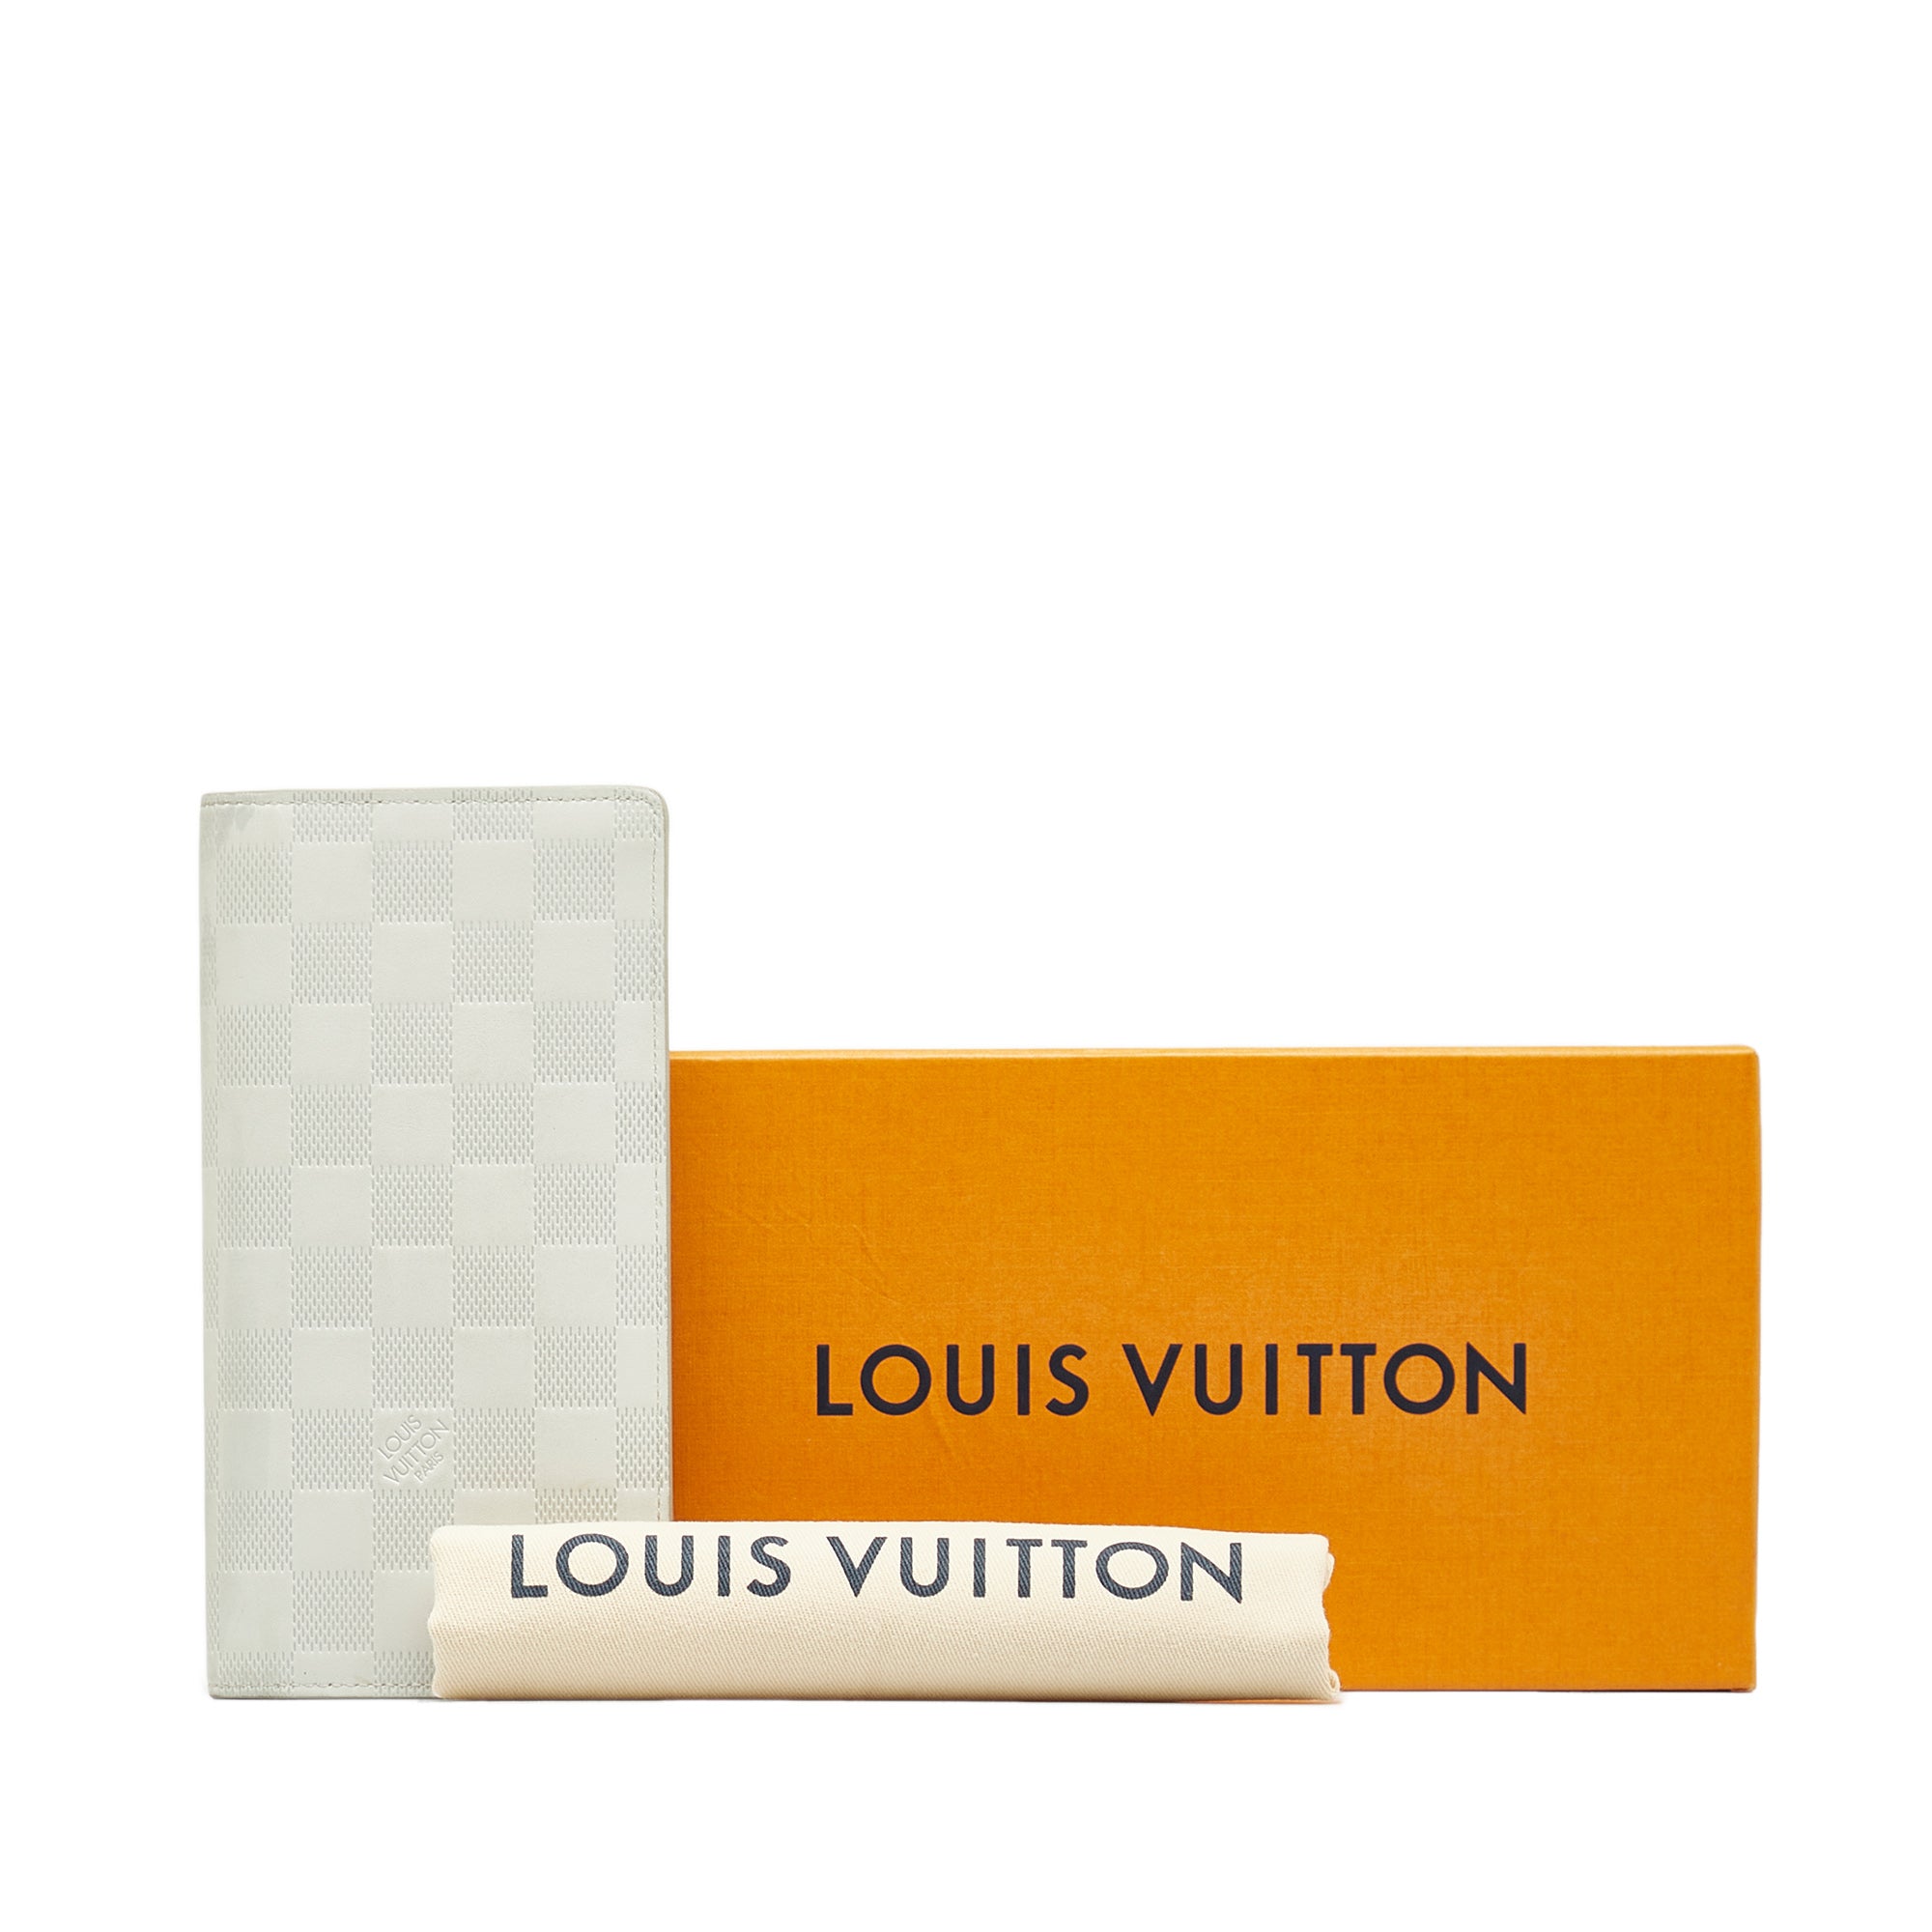 Louis Vuitton Air Force 1 Auctions Garner Bids Above $60